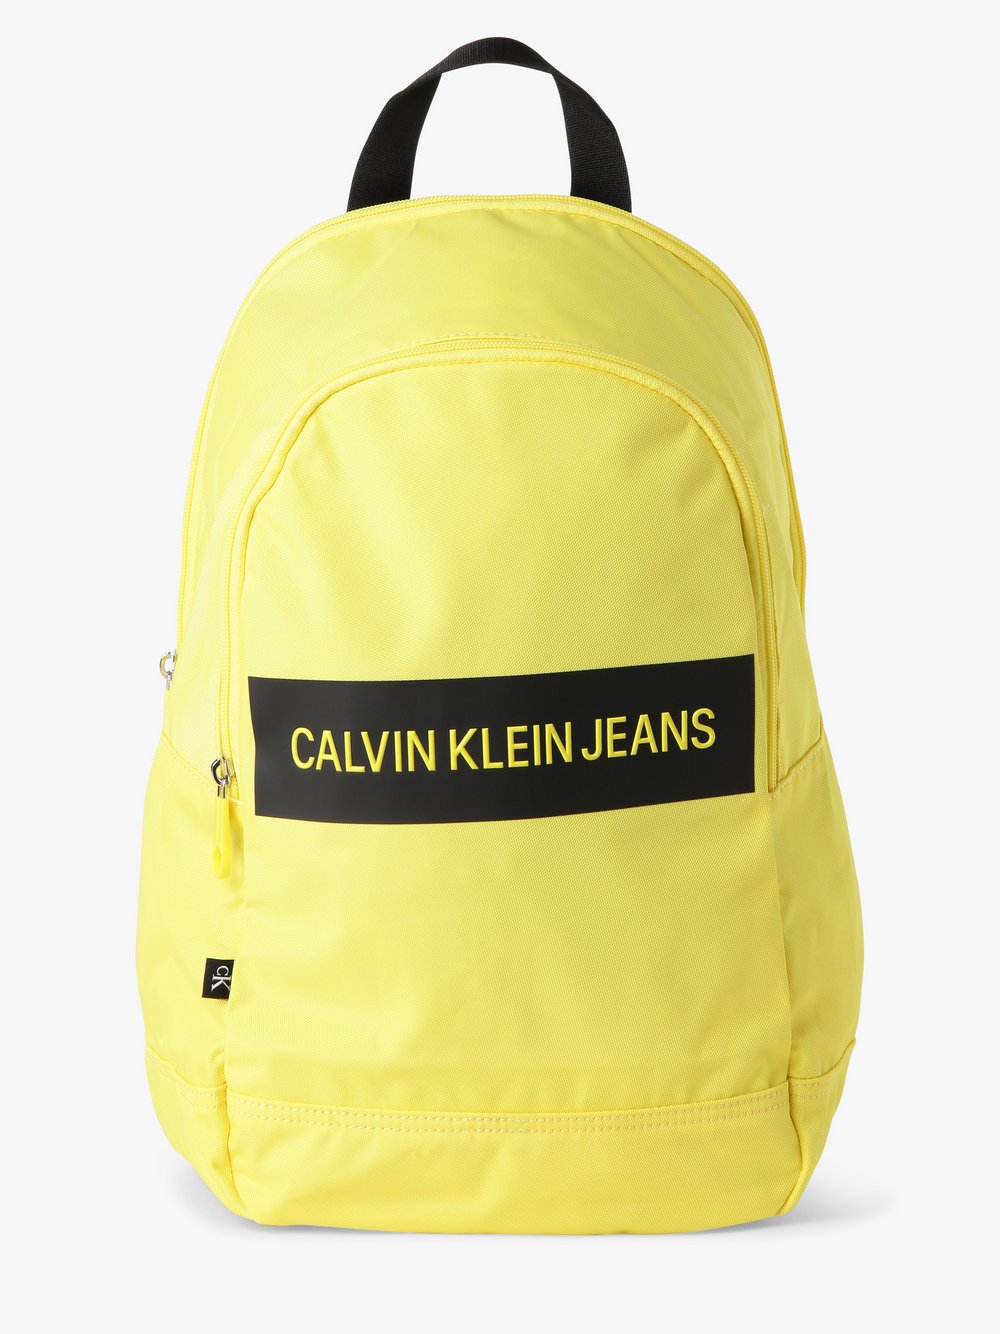 Calvin Klein Jeans - Plecak męski, żółty